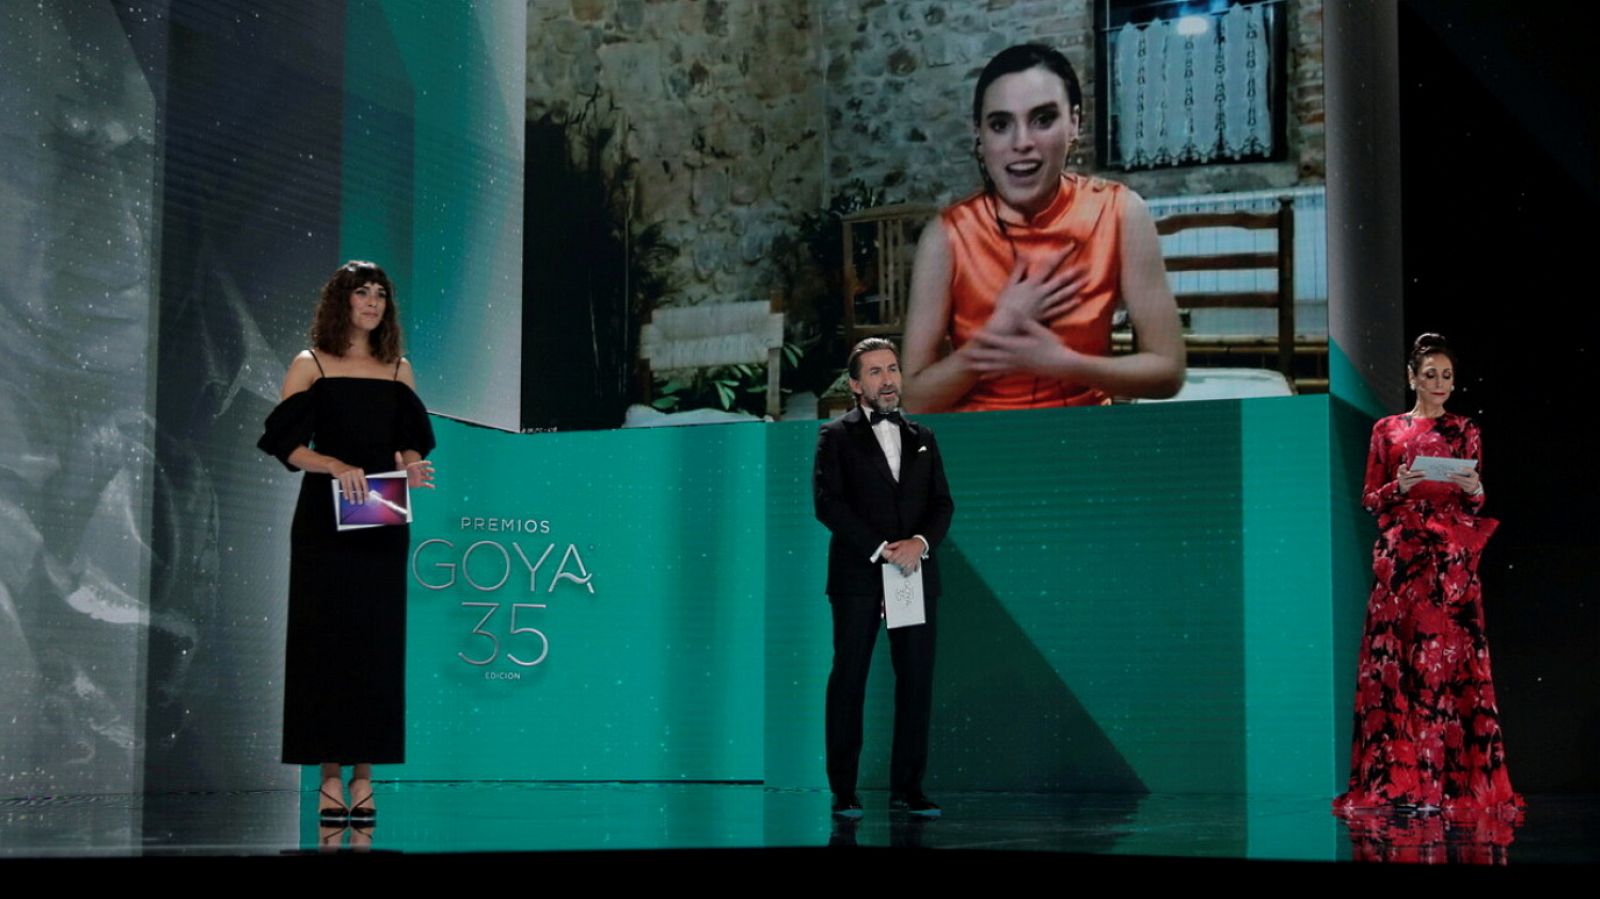 Premios Goya 2021 - Gala de los Premios Goya 2021 